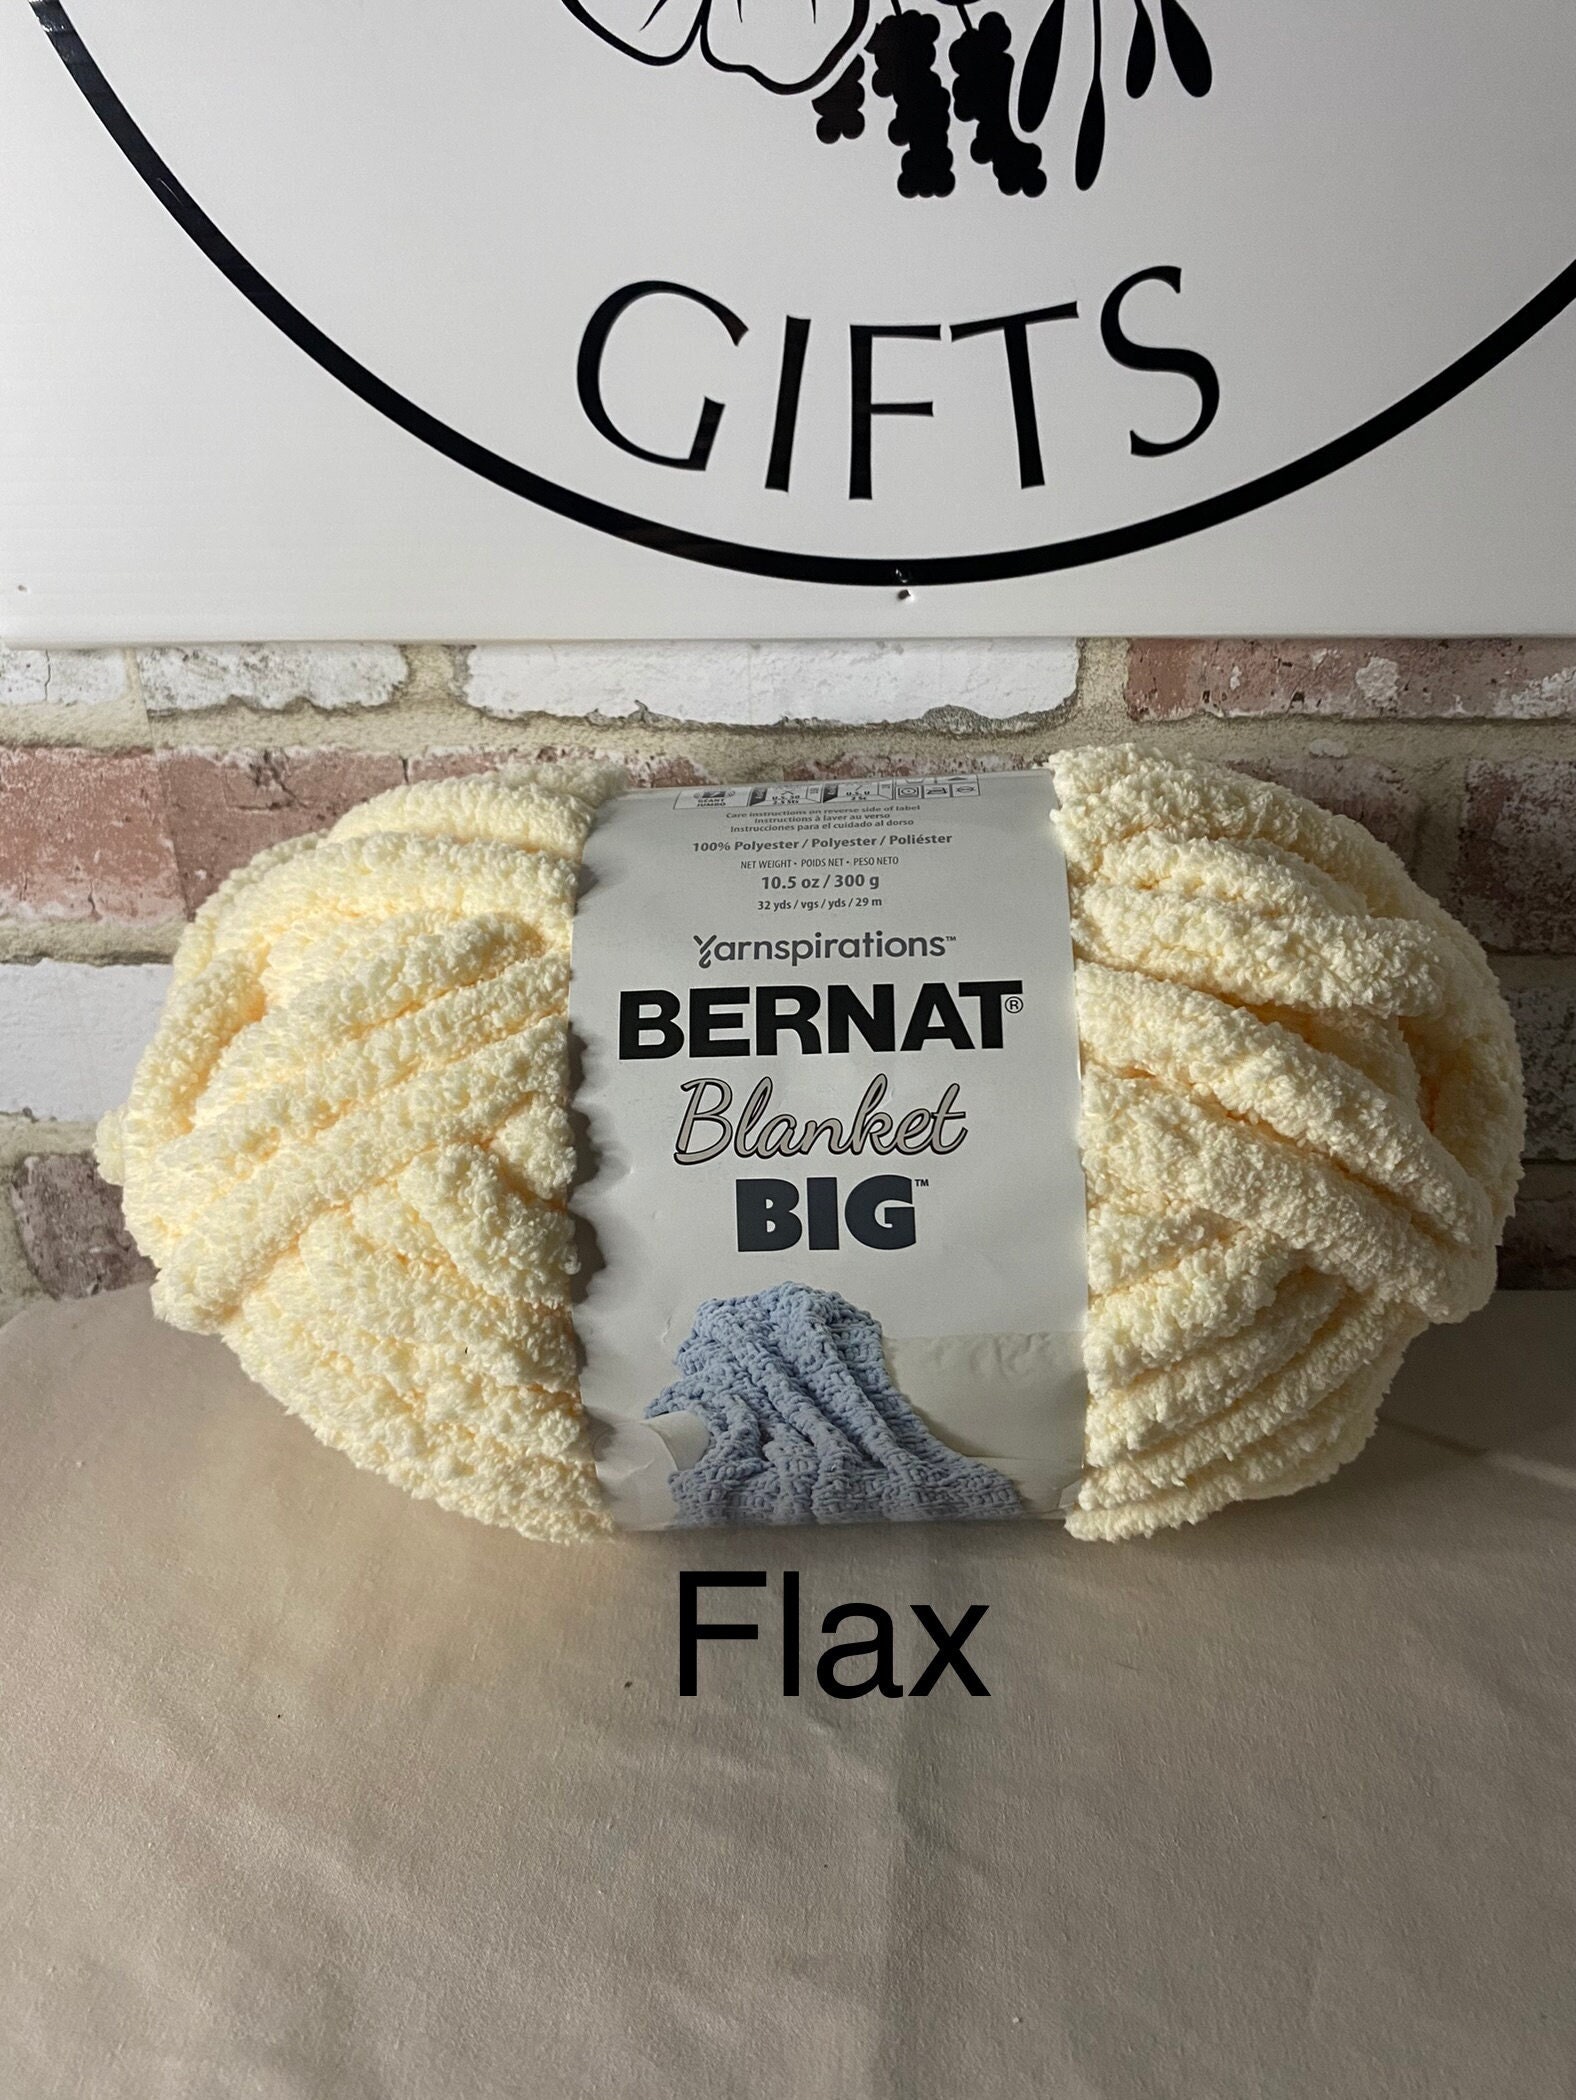 Bernat 8.8oz Super Bulky Polyester Forever Fleece Tweed Blanket Yarn by  Bernat